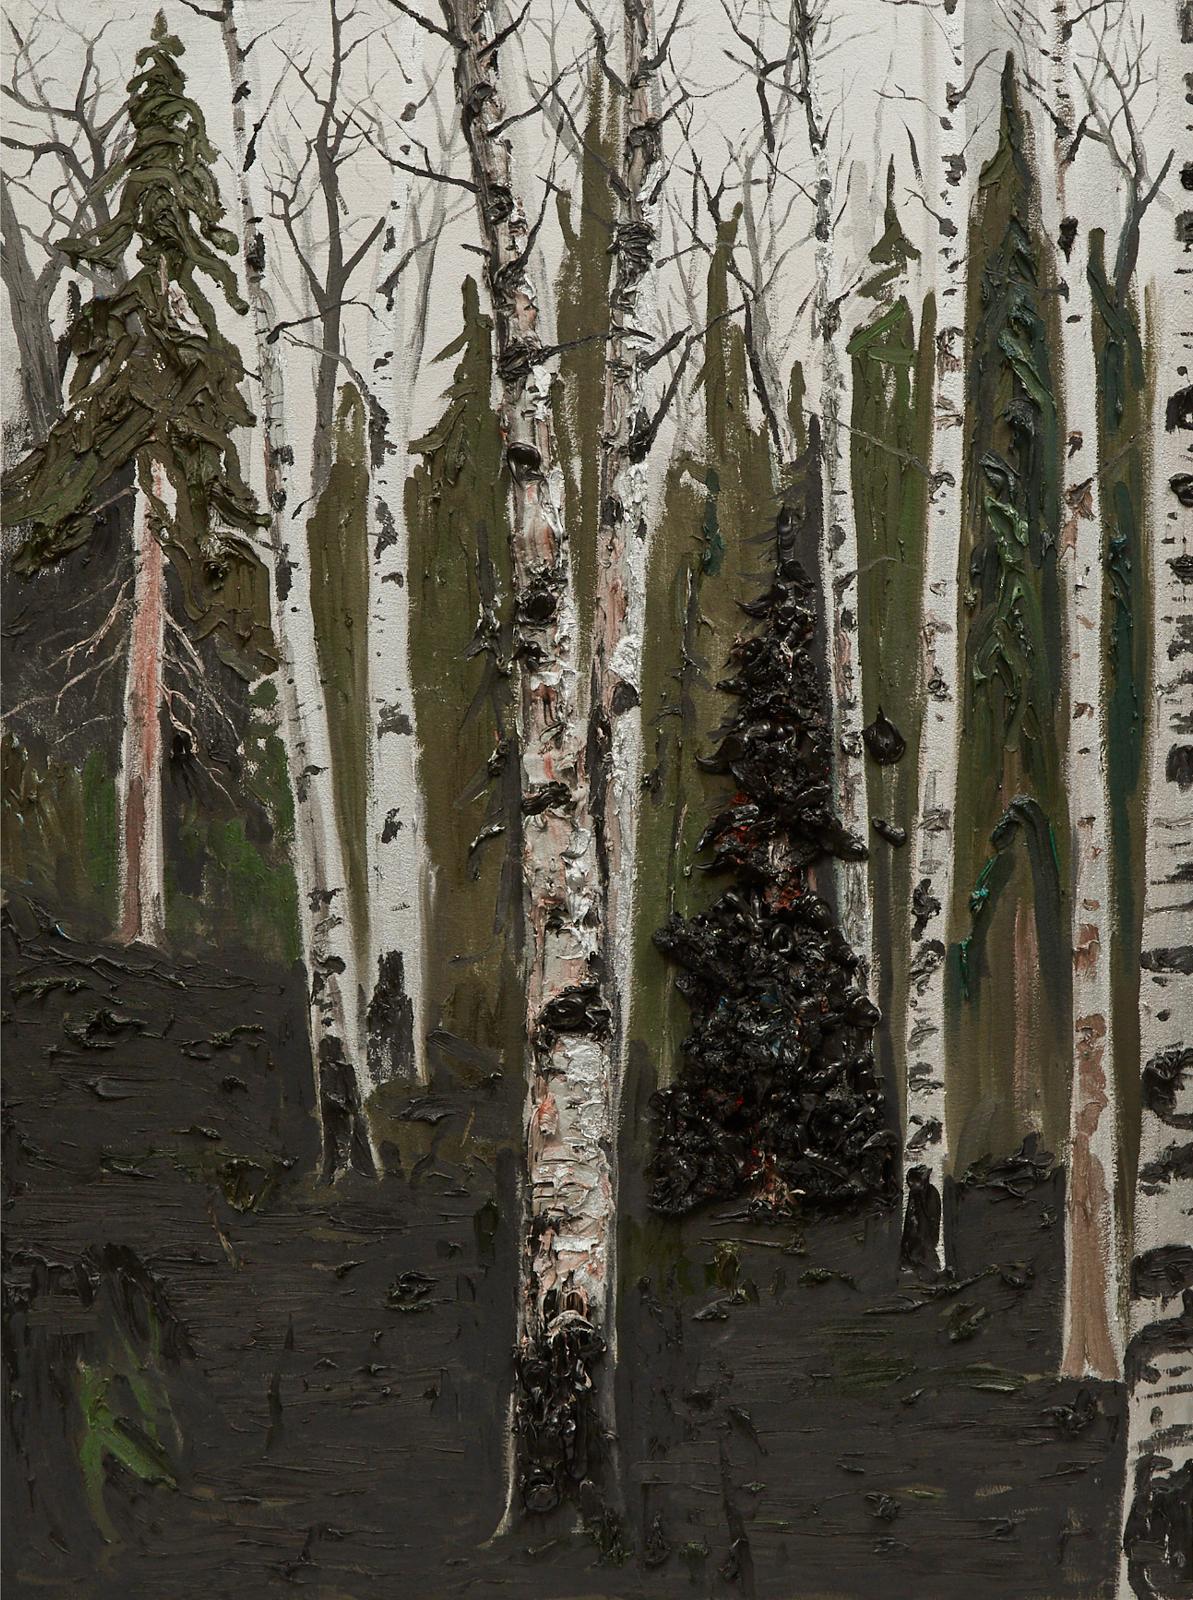 Kim Dorland (1974) - Untitled (Silver Birches), 2011